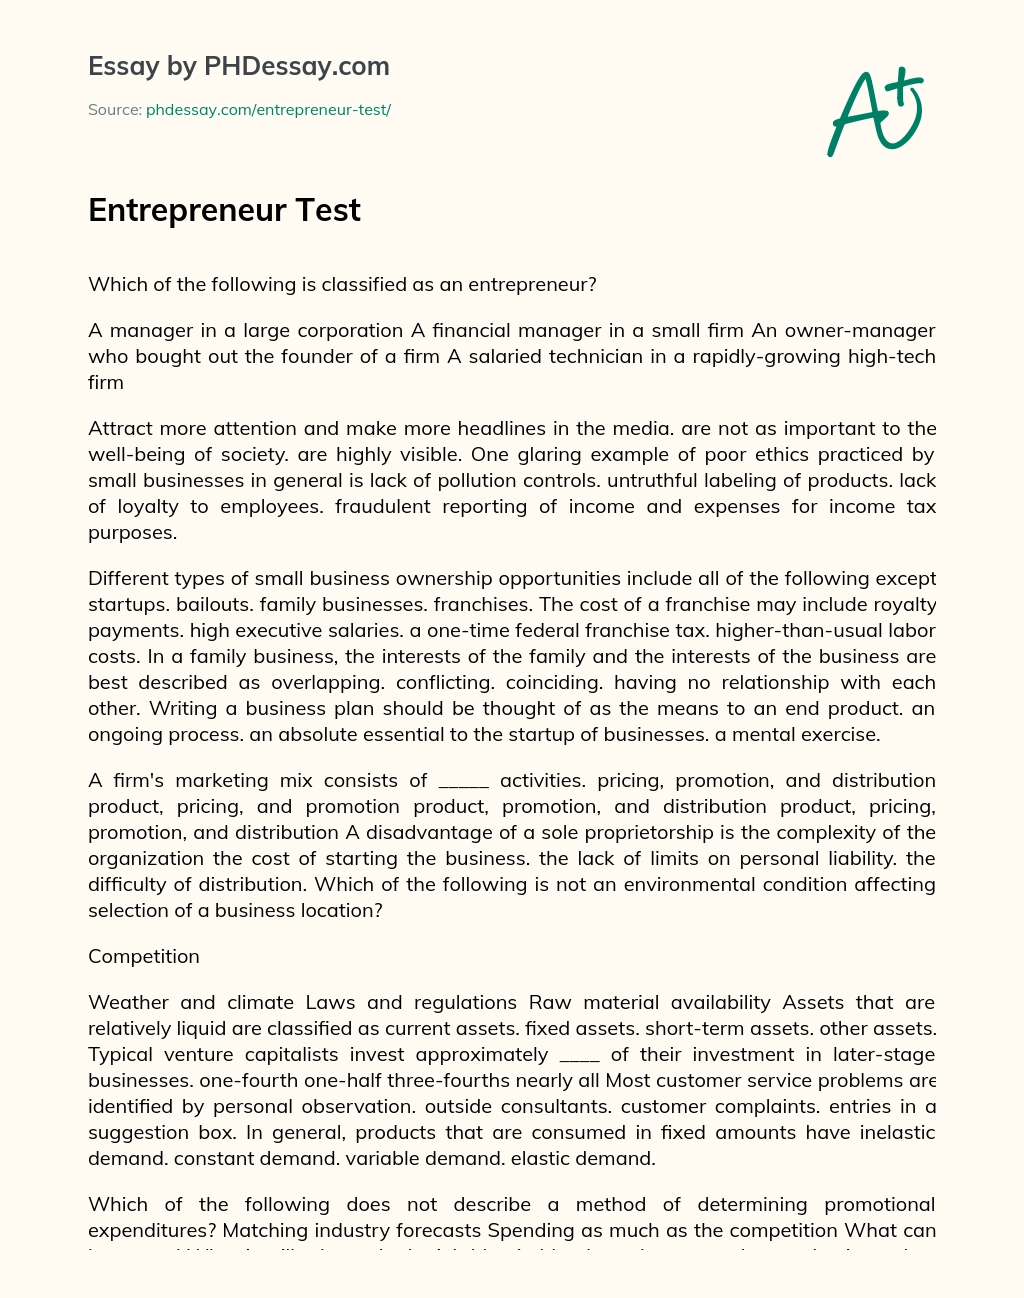 Entrepreneur Test essay